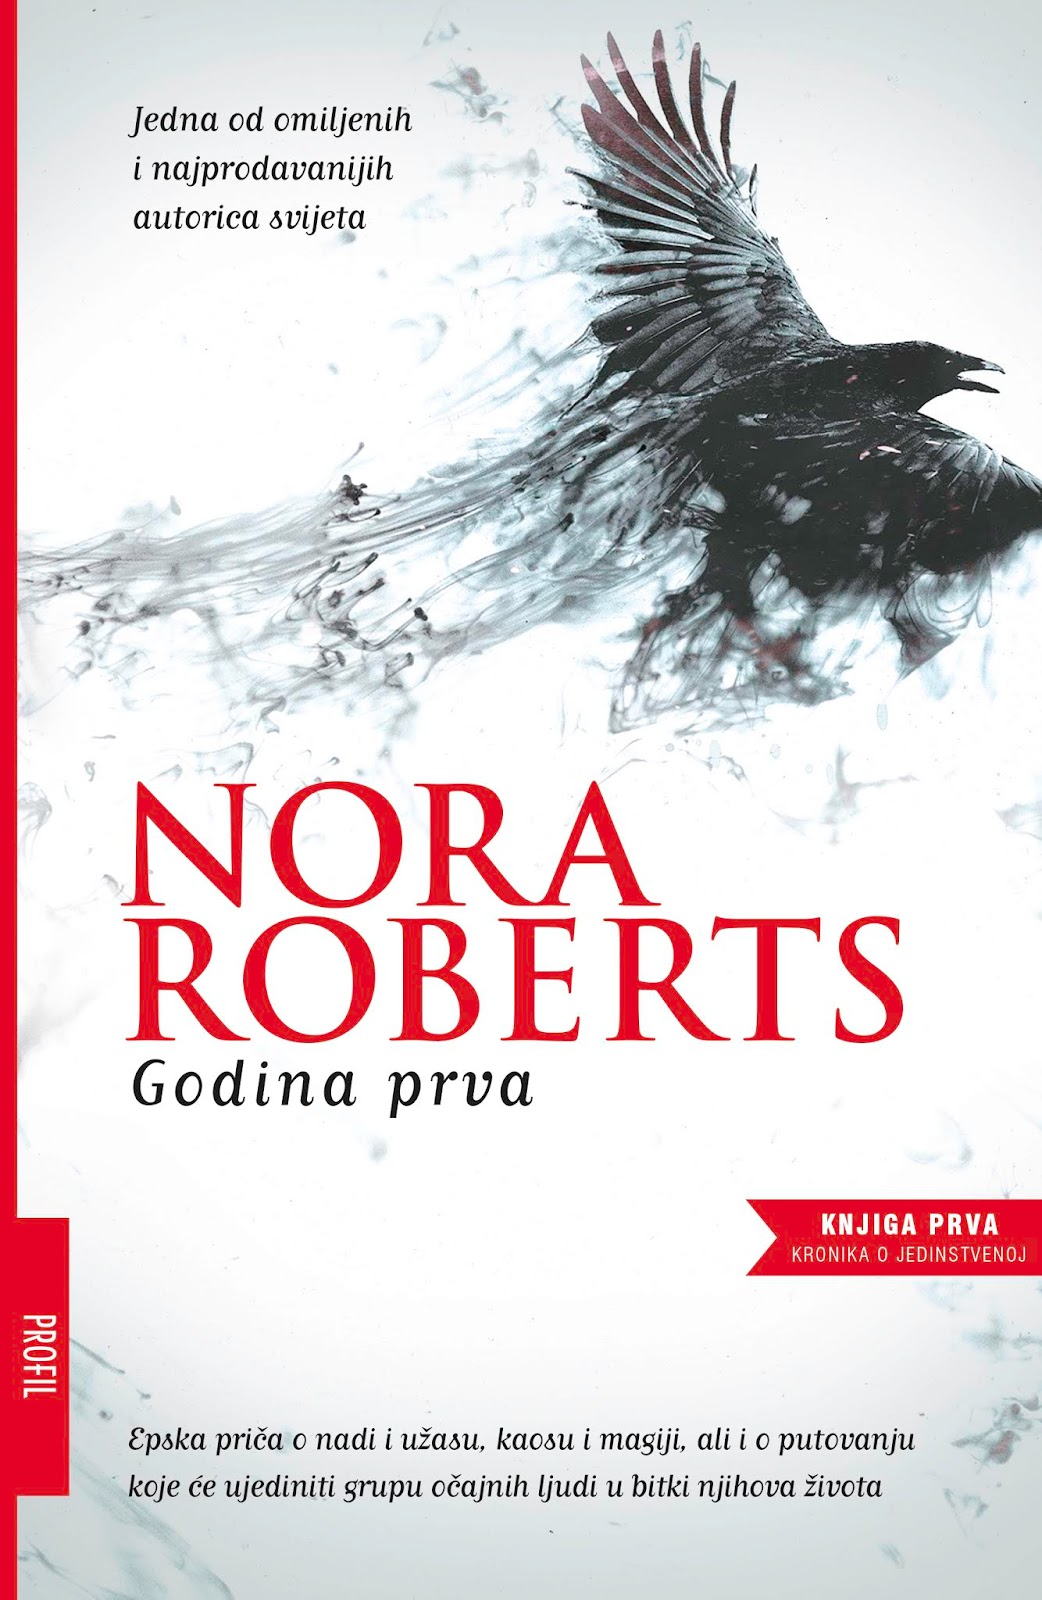 Nora Roberts GODINA PRVA